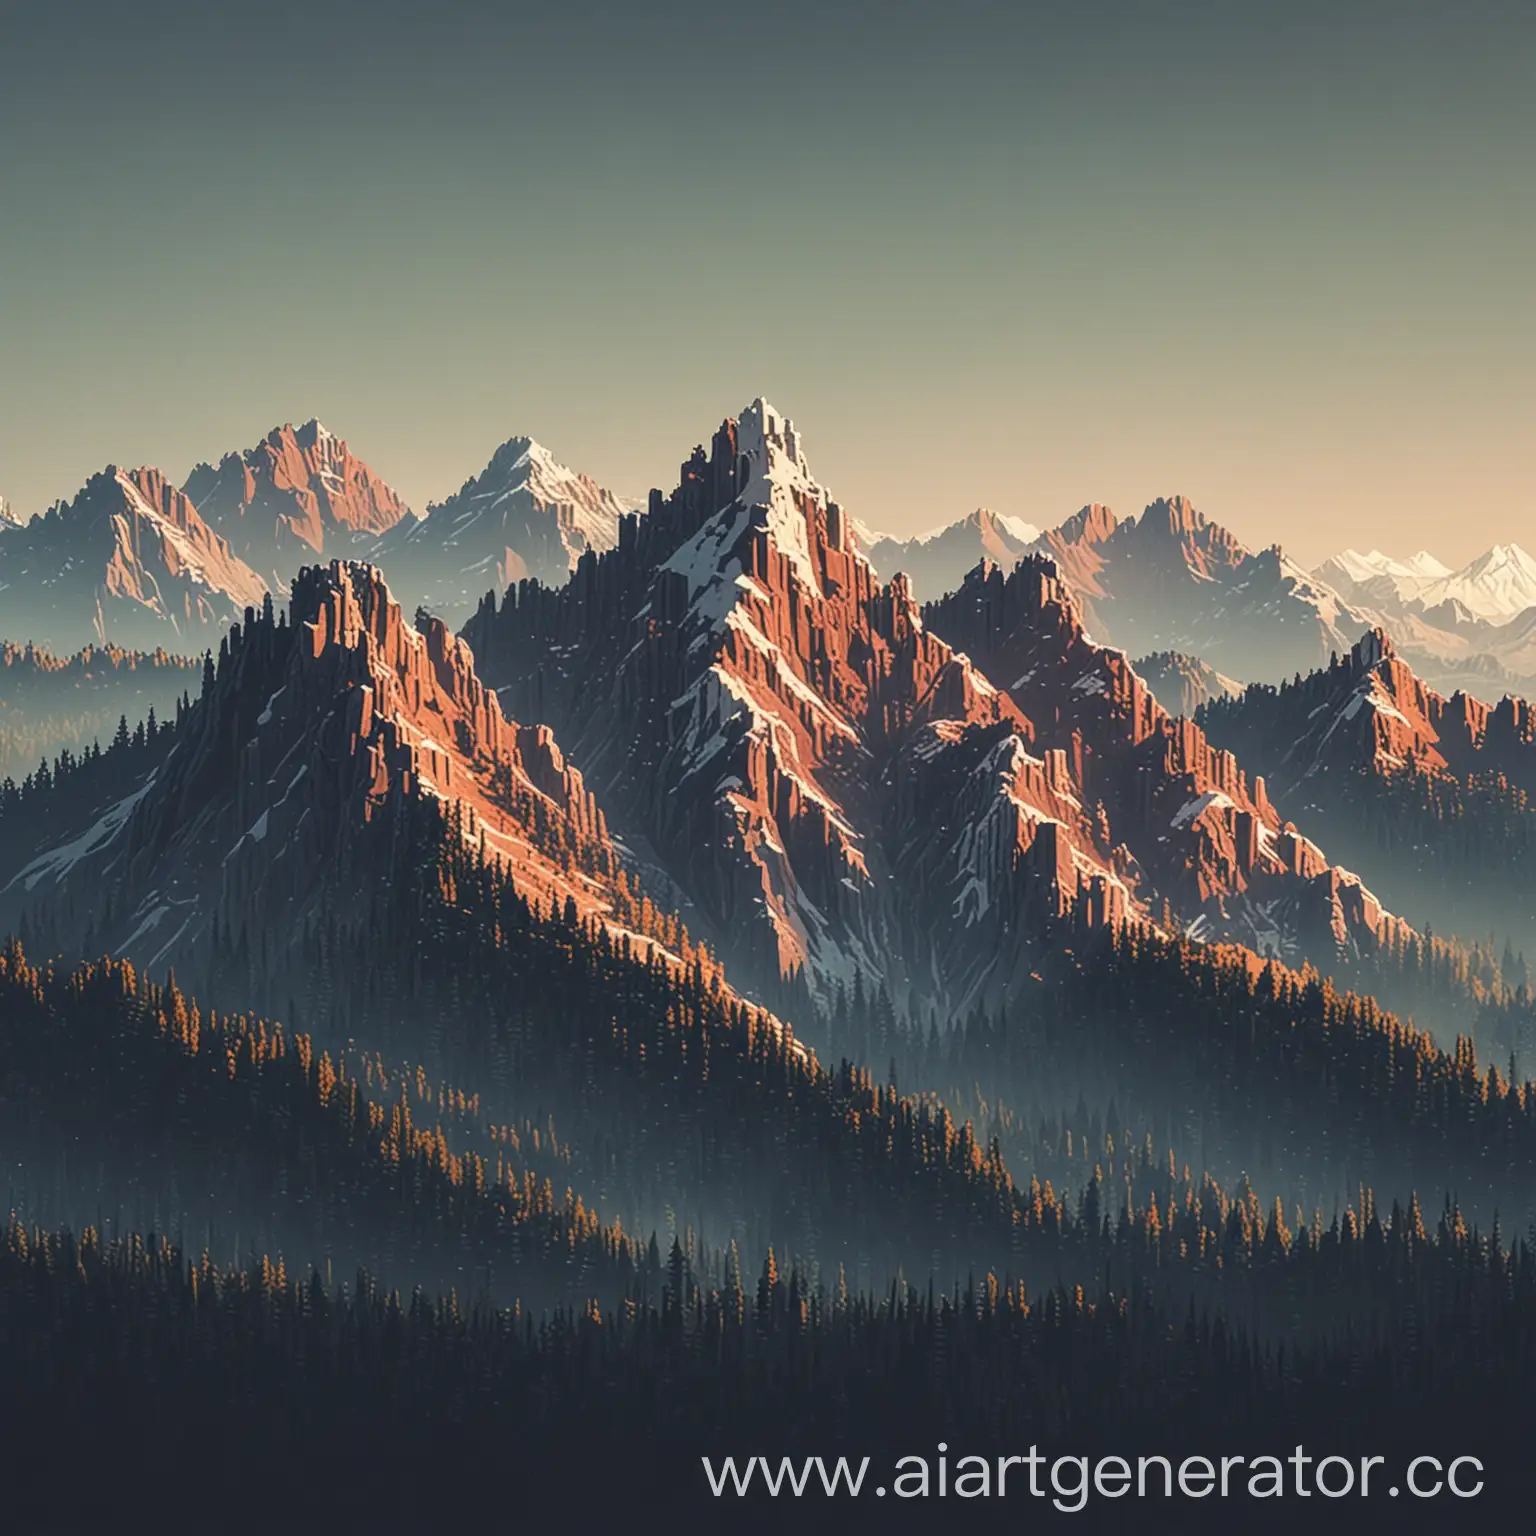 Pixelated-Mountain-Landscape-with-Sunrise-Glow